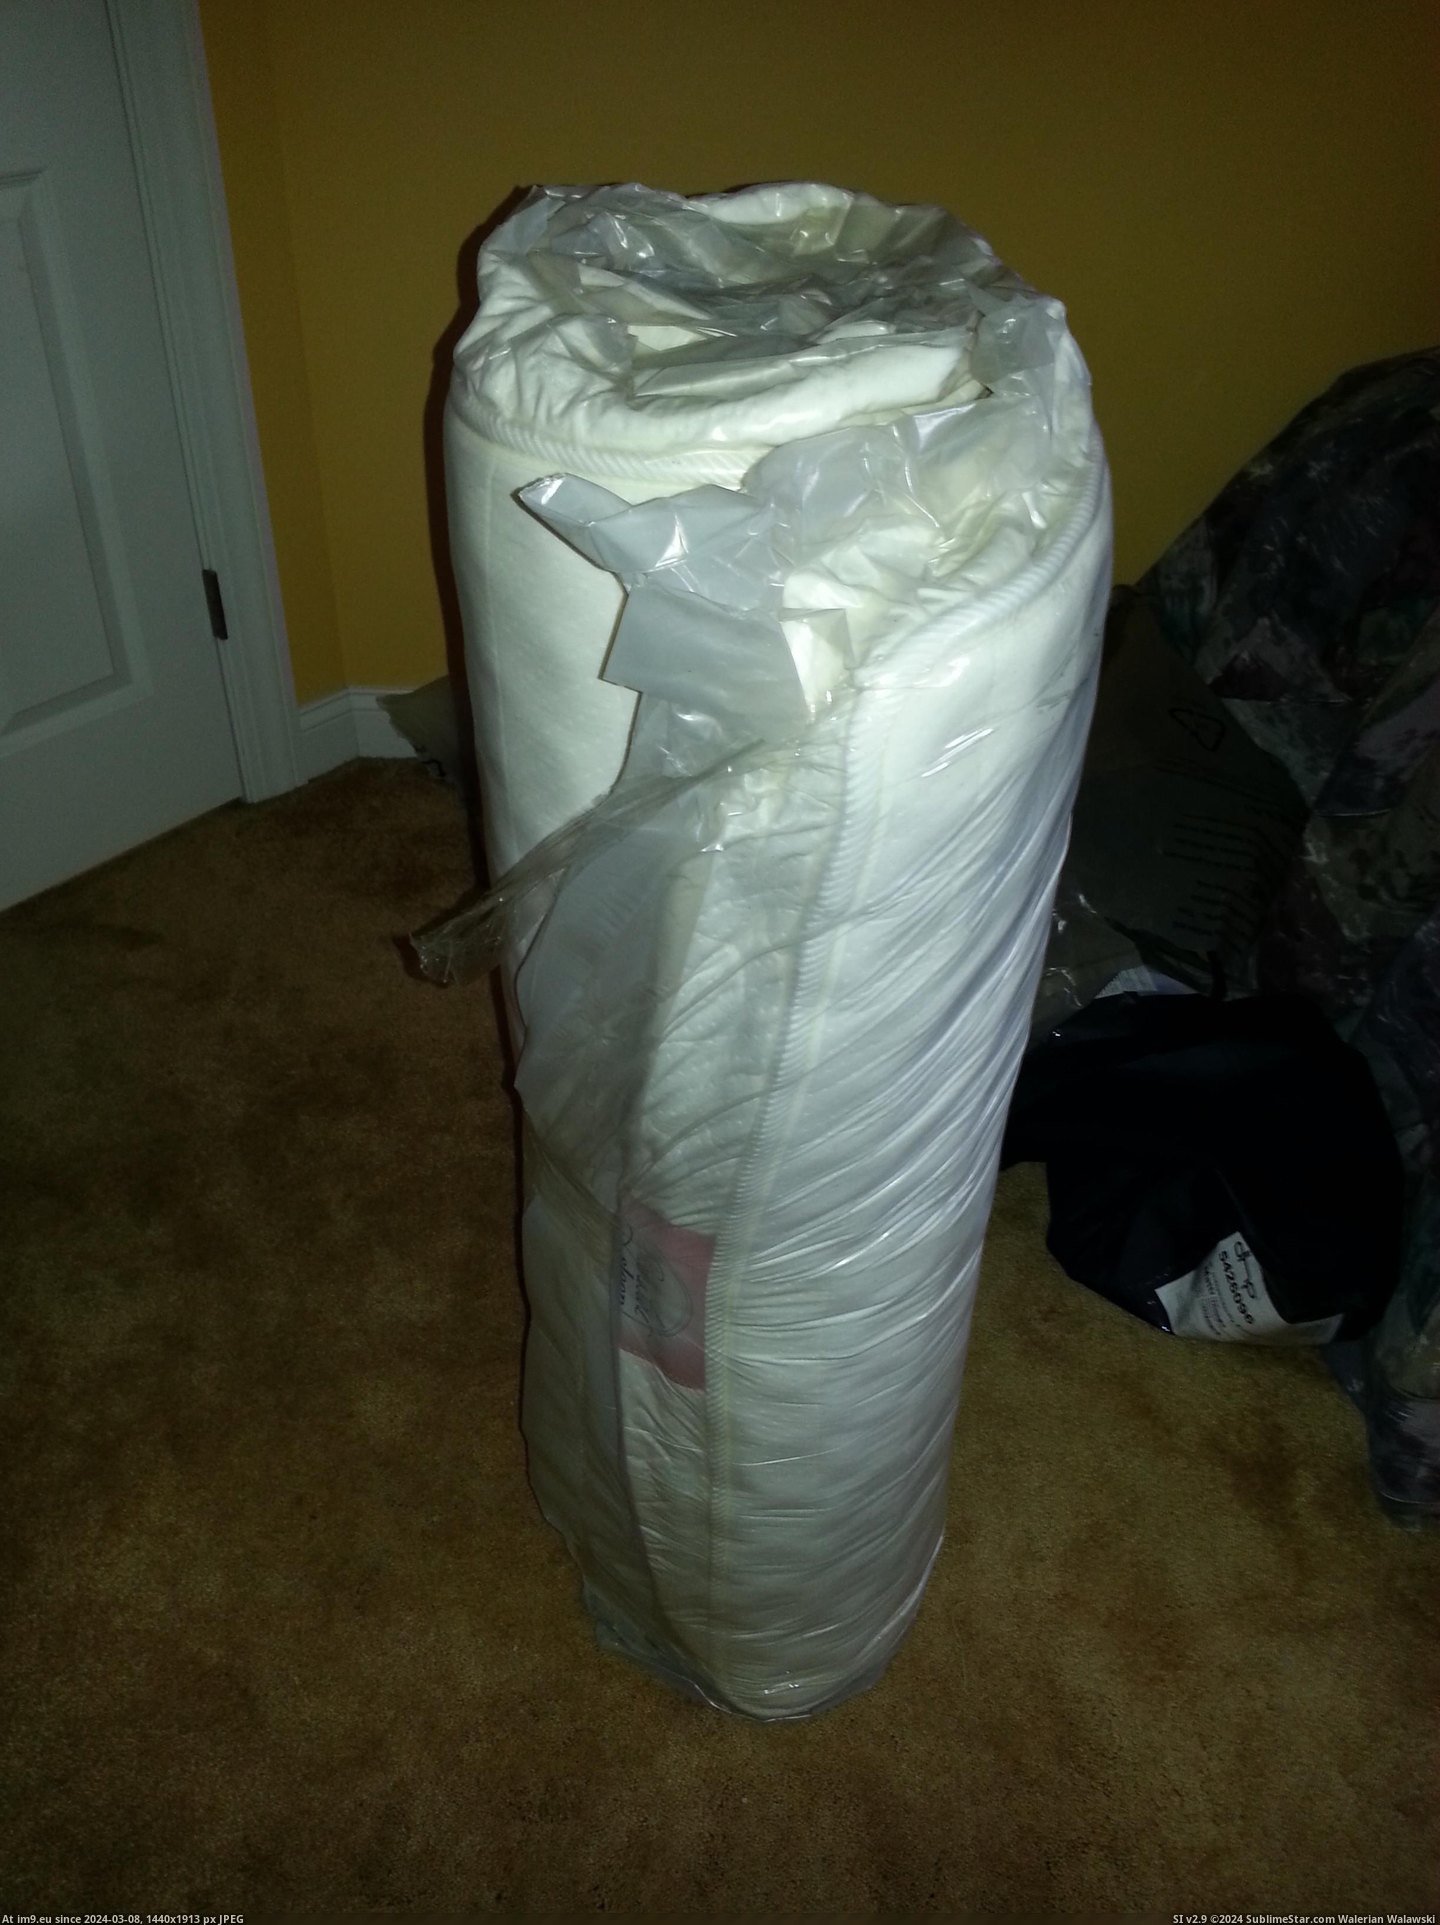 #Broke #Bag #Vacuum #Duffle #Unrolled #Seal #Mattress [Mildlyinteresting] Got a mattress in a duffle bag today, unrolled it and broke the vacuum seal 6 Pic. (Image of album My r/MILDLYINTERESTING favs))